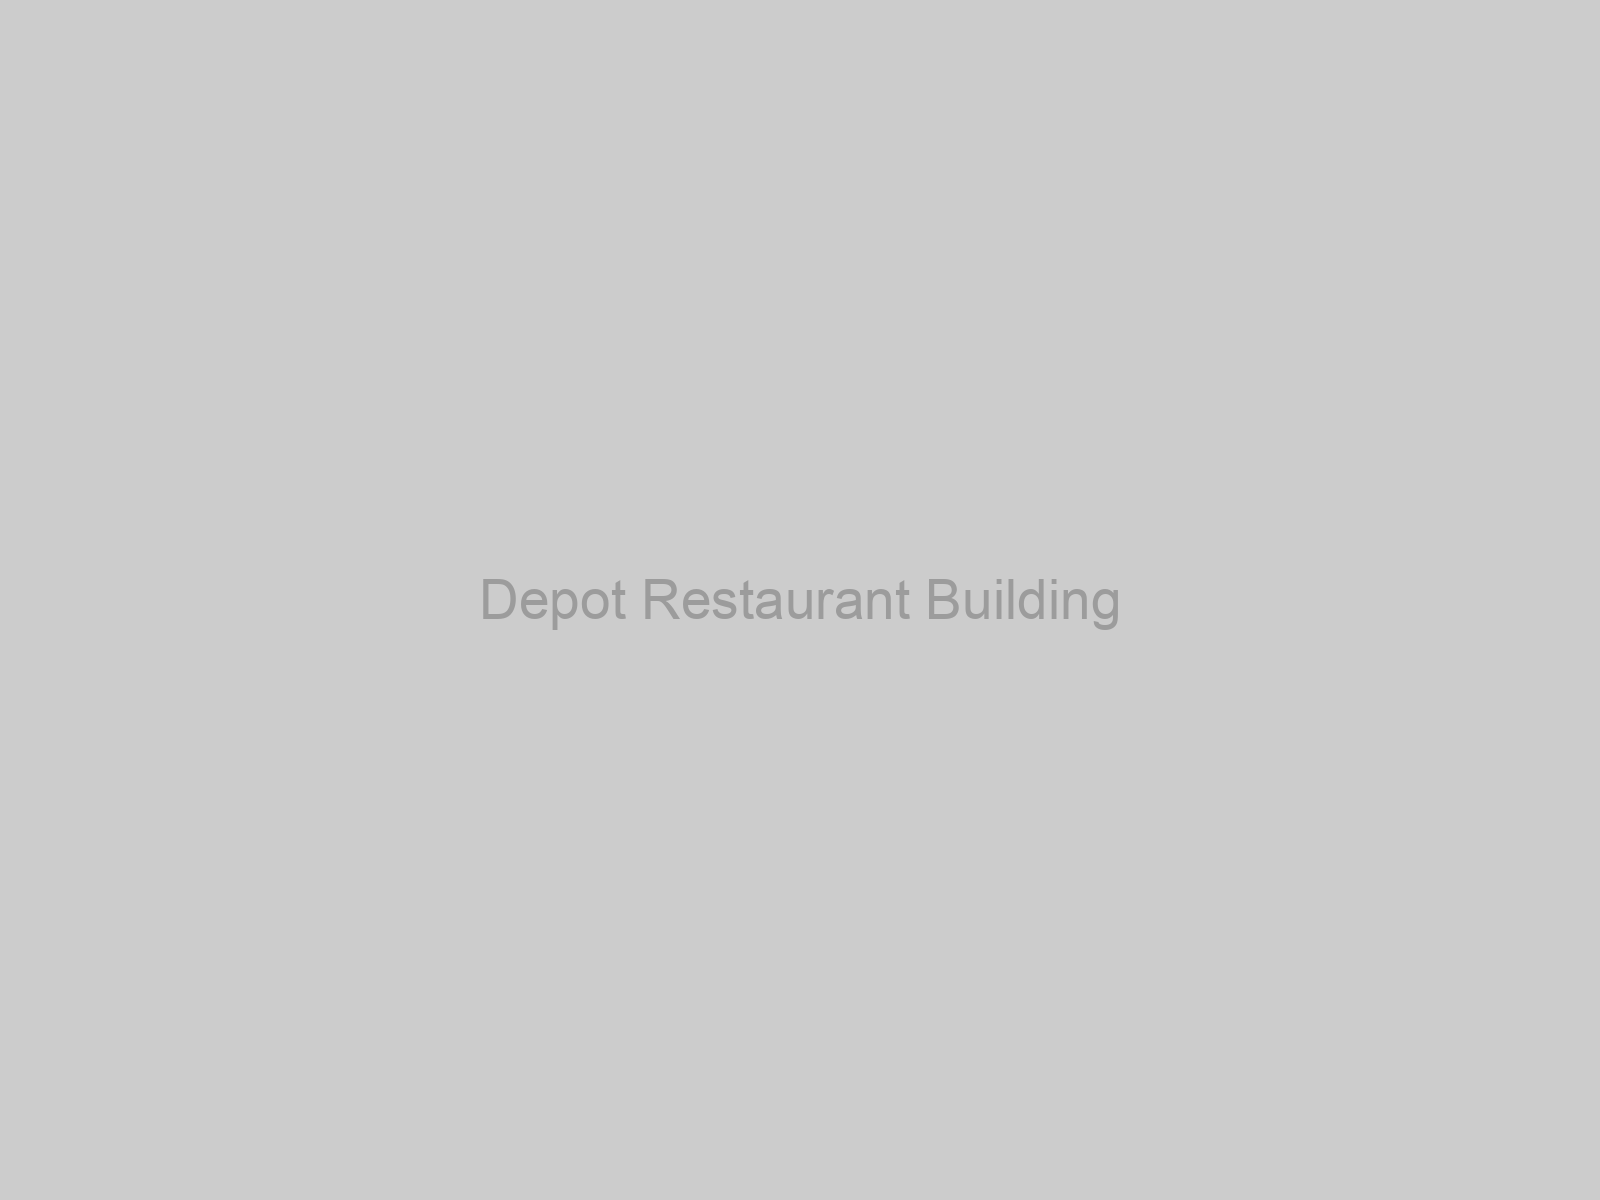 Depot Restaurant Building